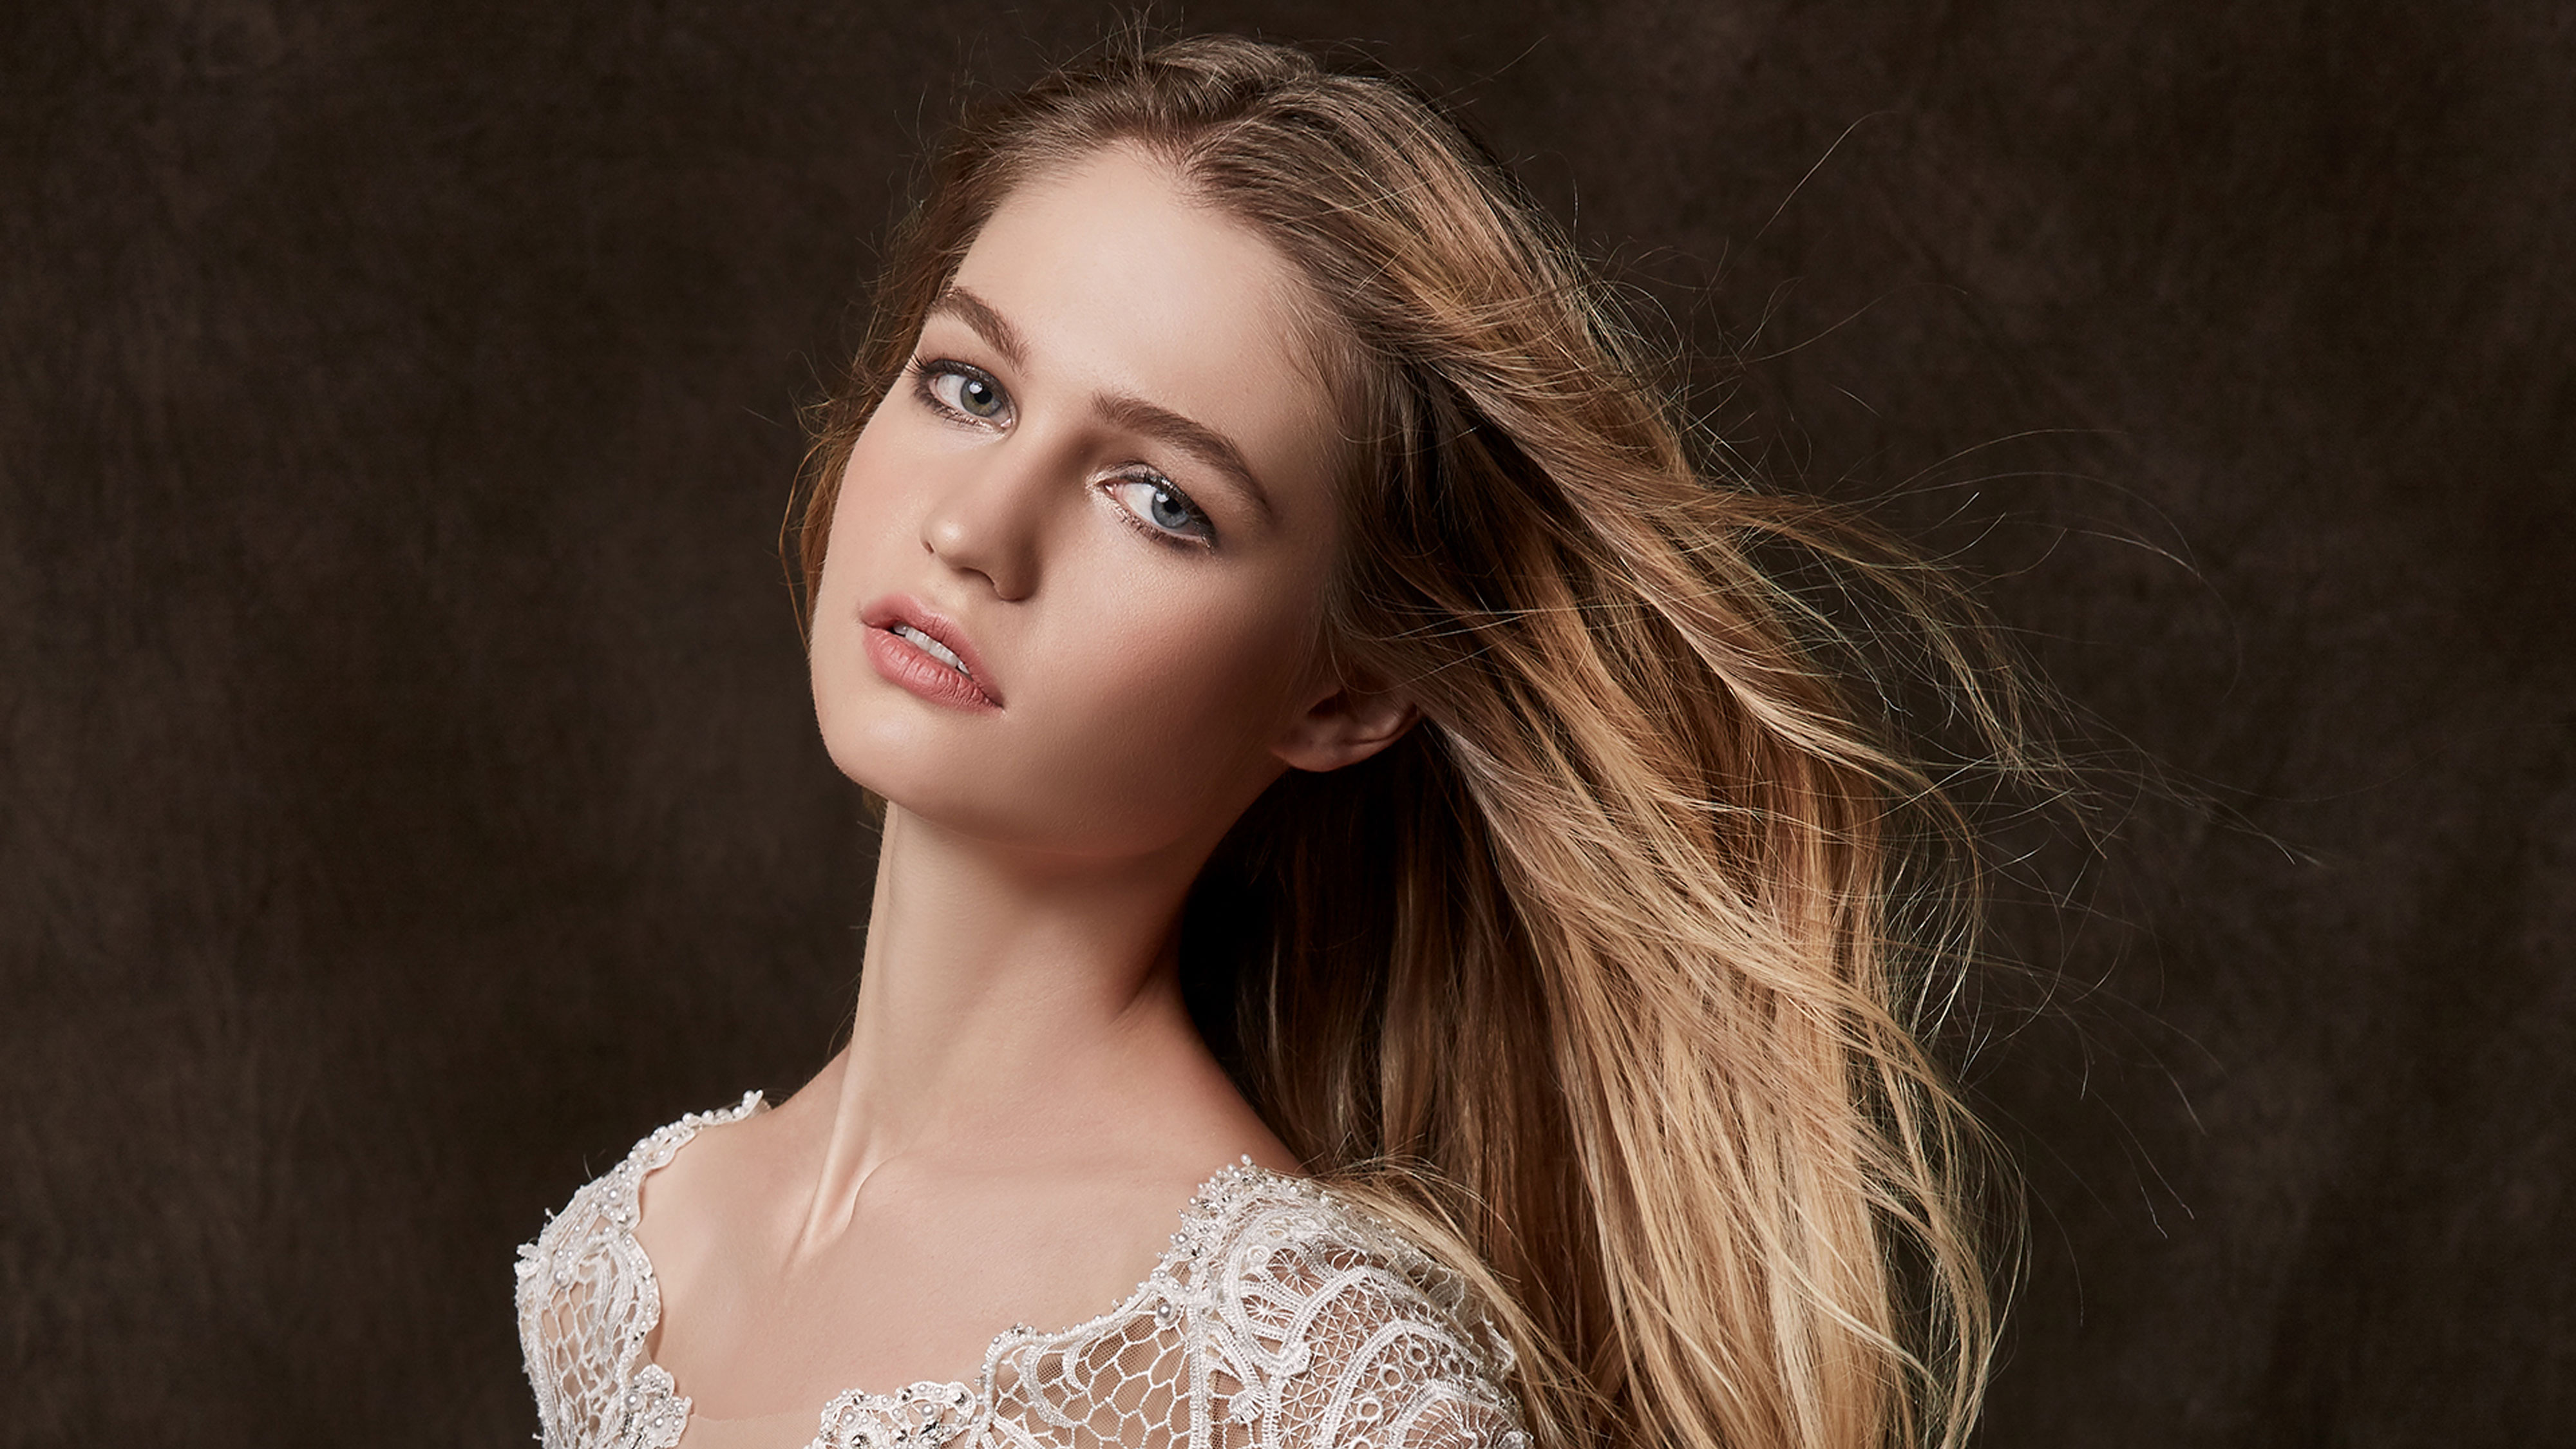 Blonde Hair Girl Model 4k Hd Girls 4k Wallpapers Images Backgrounds